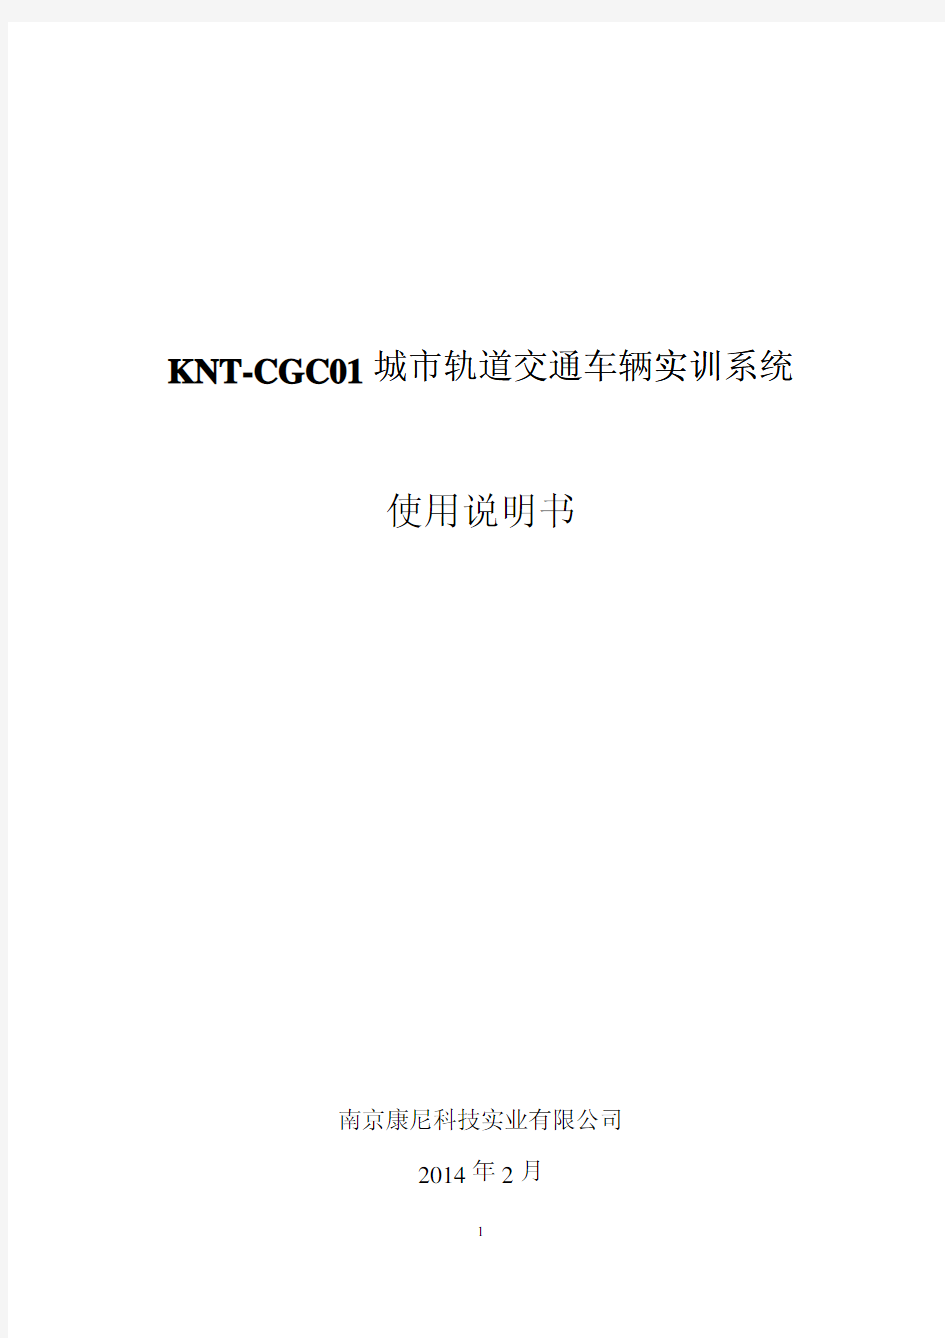 KNT-CGC01使用说明书V1.0